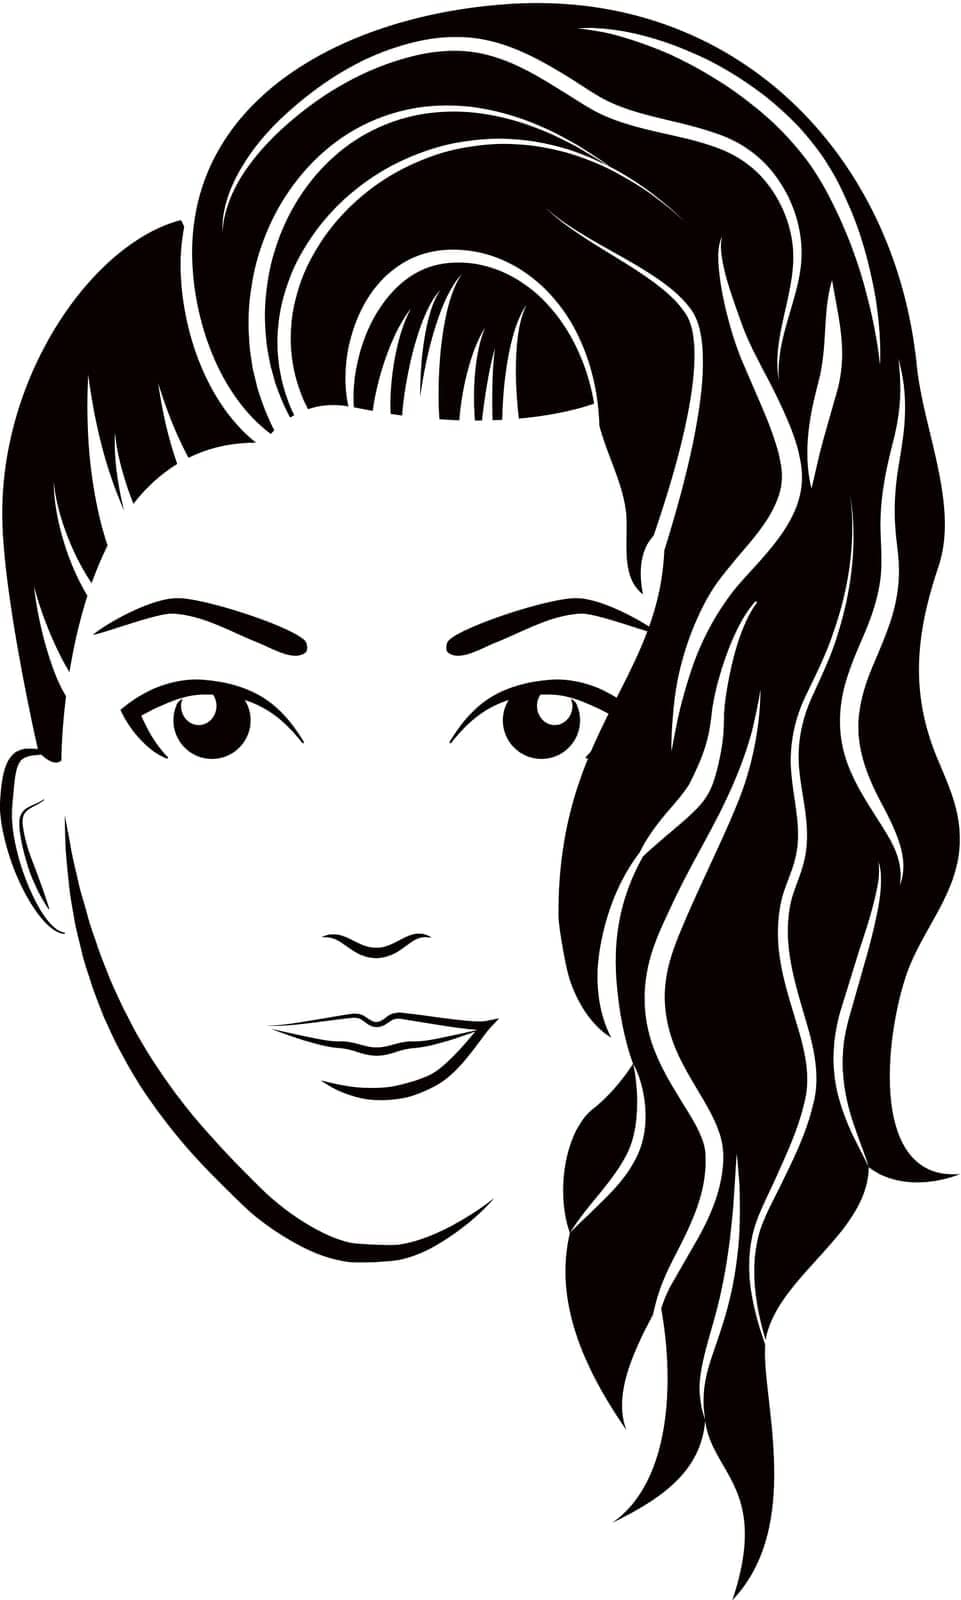 Woman head with curly hairstyle. Fashion trendy female headdress logo monochrome illustration